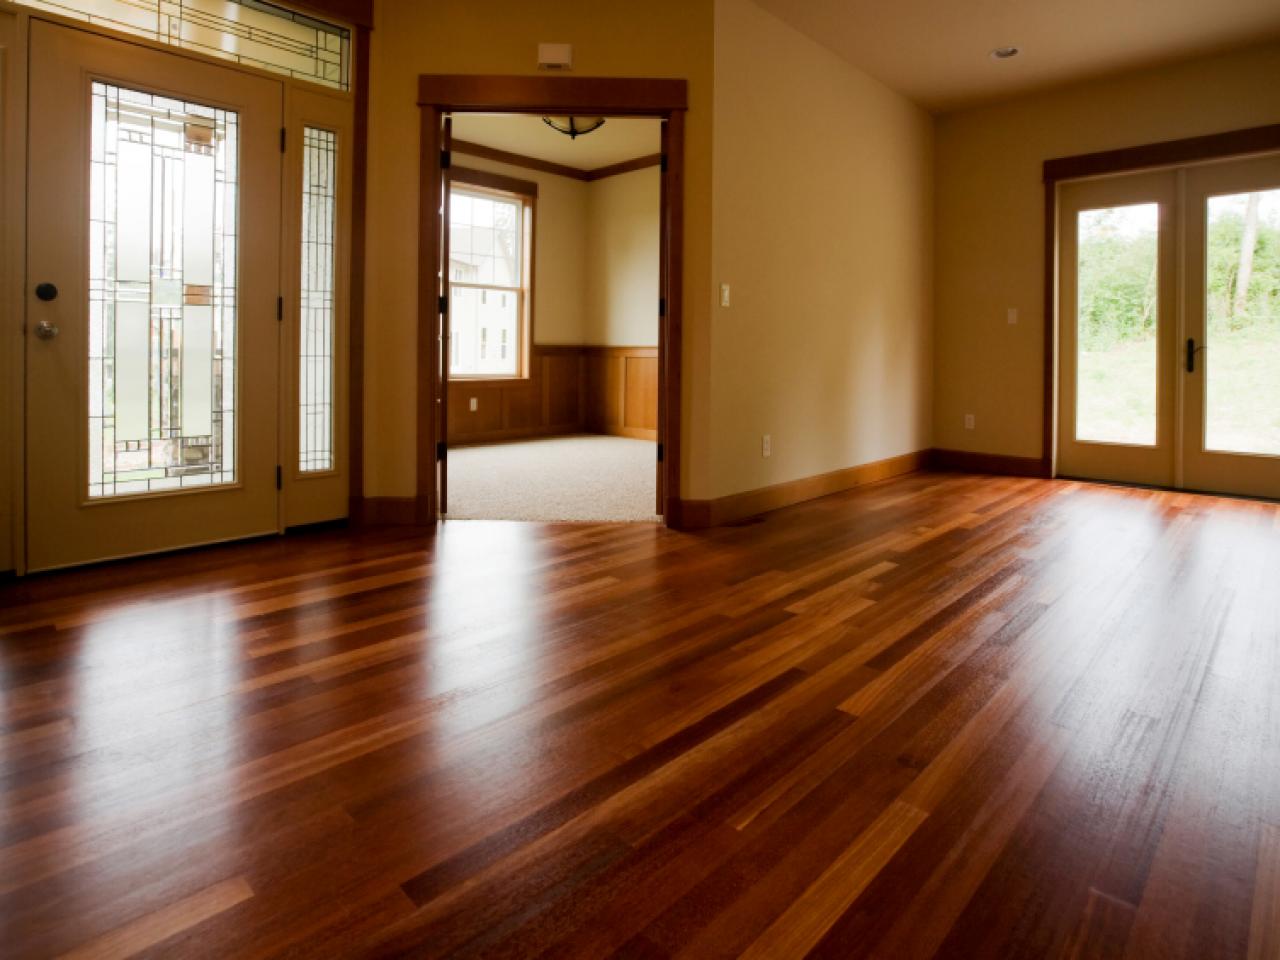 Cleaning Tile Wood And Vinyl Floors, Pics Of Hardwood Floors